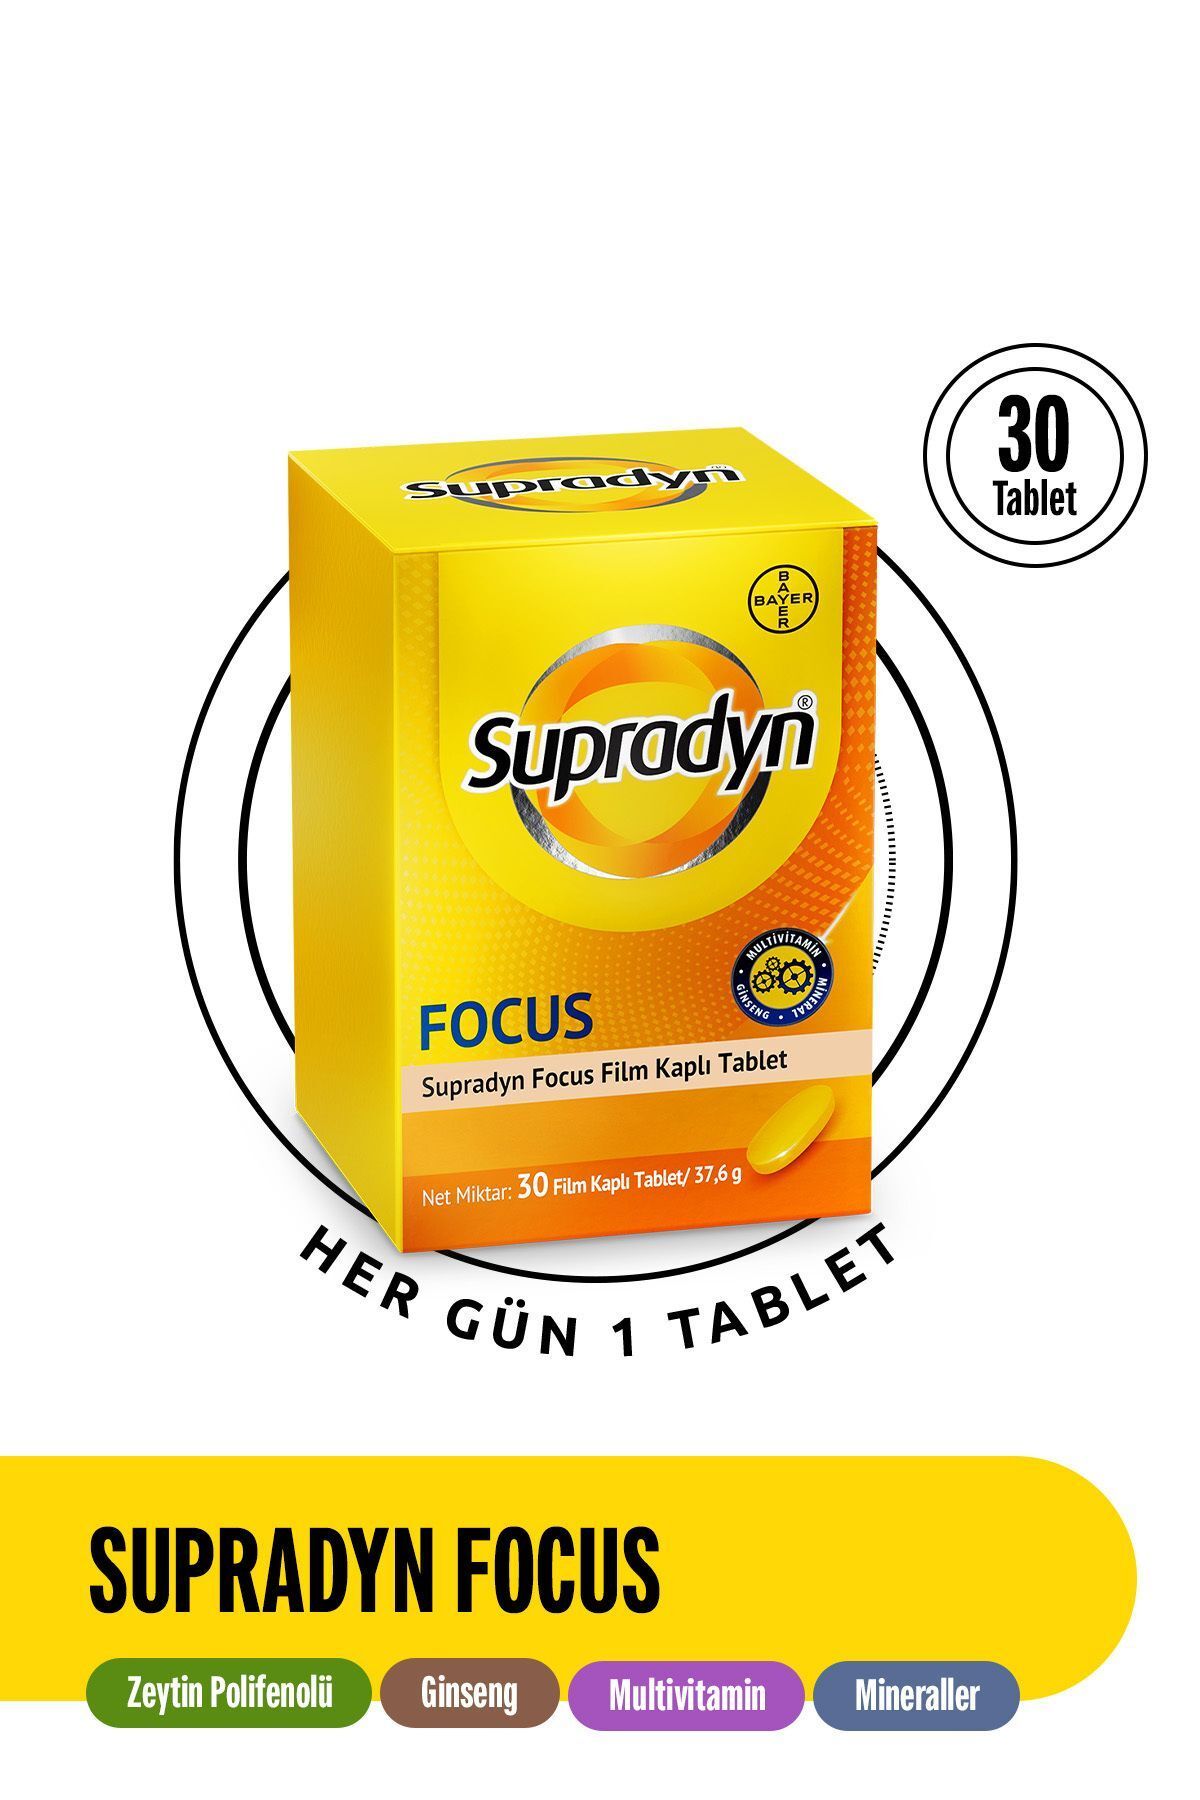 Supradyn Focus 30 Film Kaplı Tablet Zeytin Polifenolü, Ginseng, Multivitamin Ve Mineral Içeren